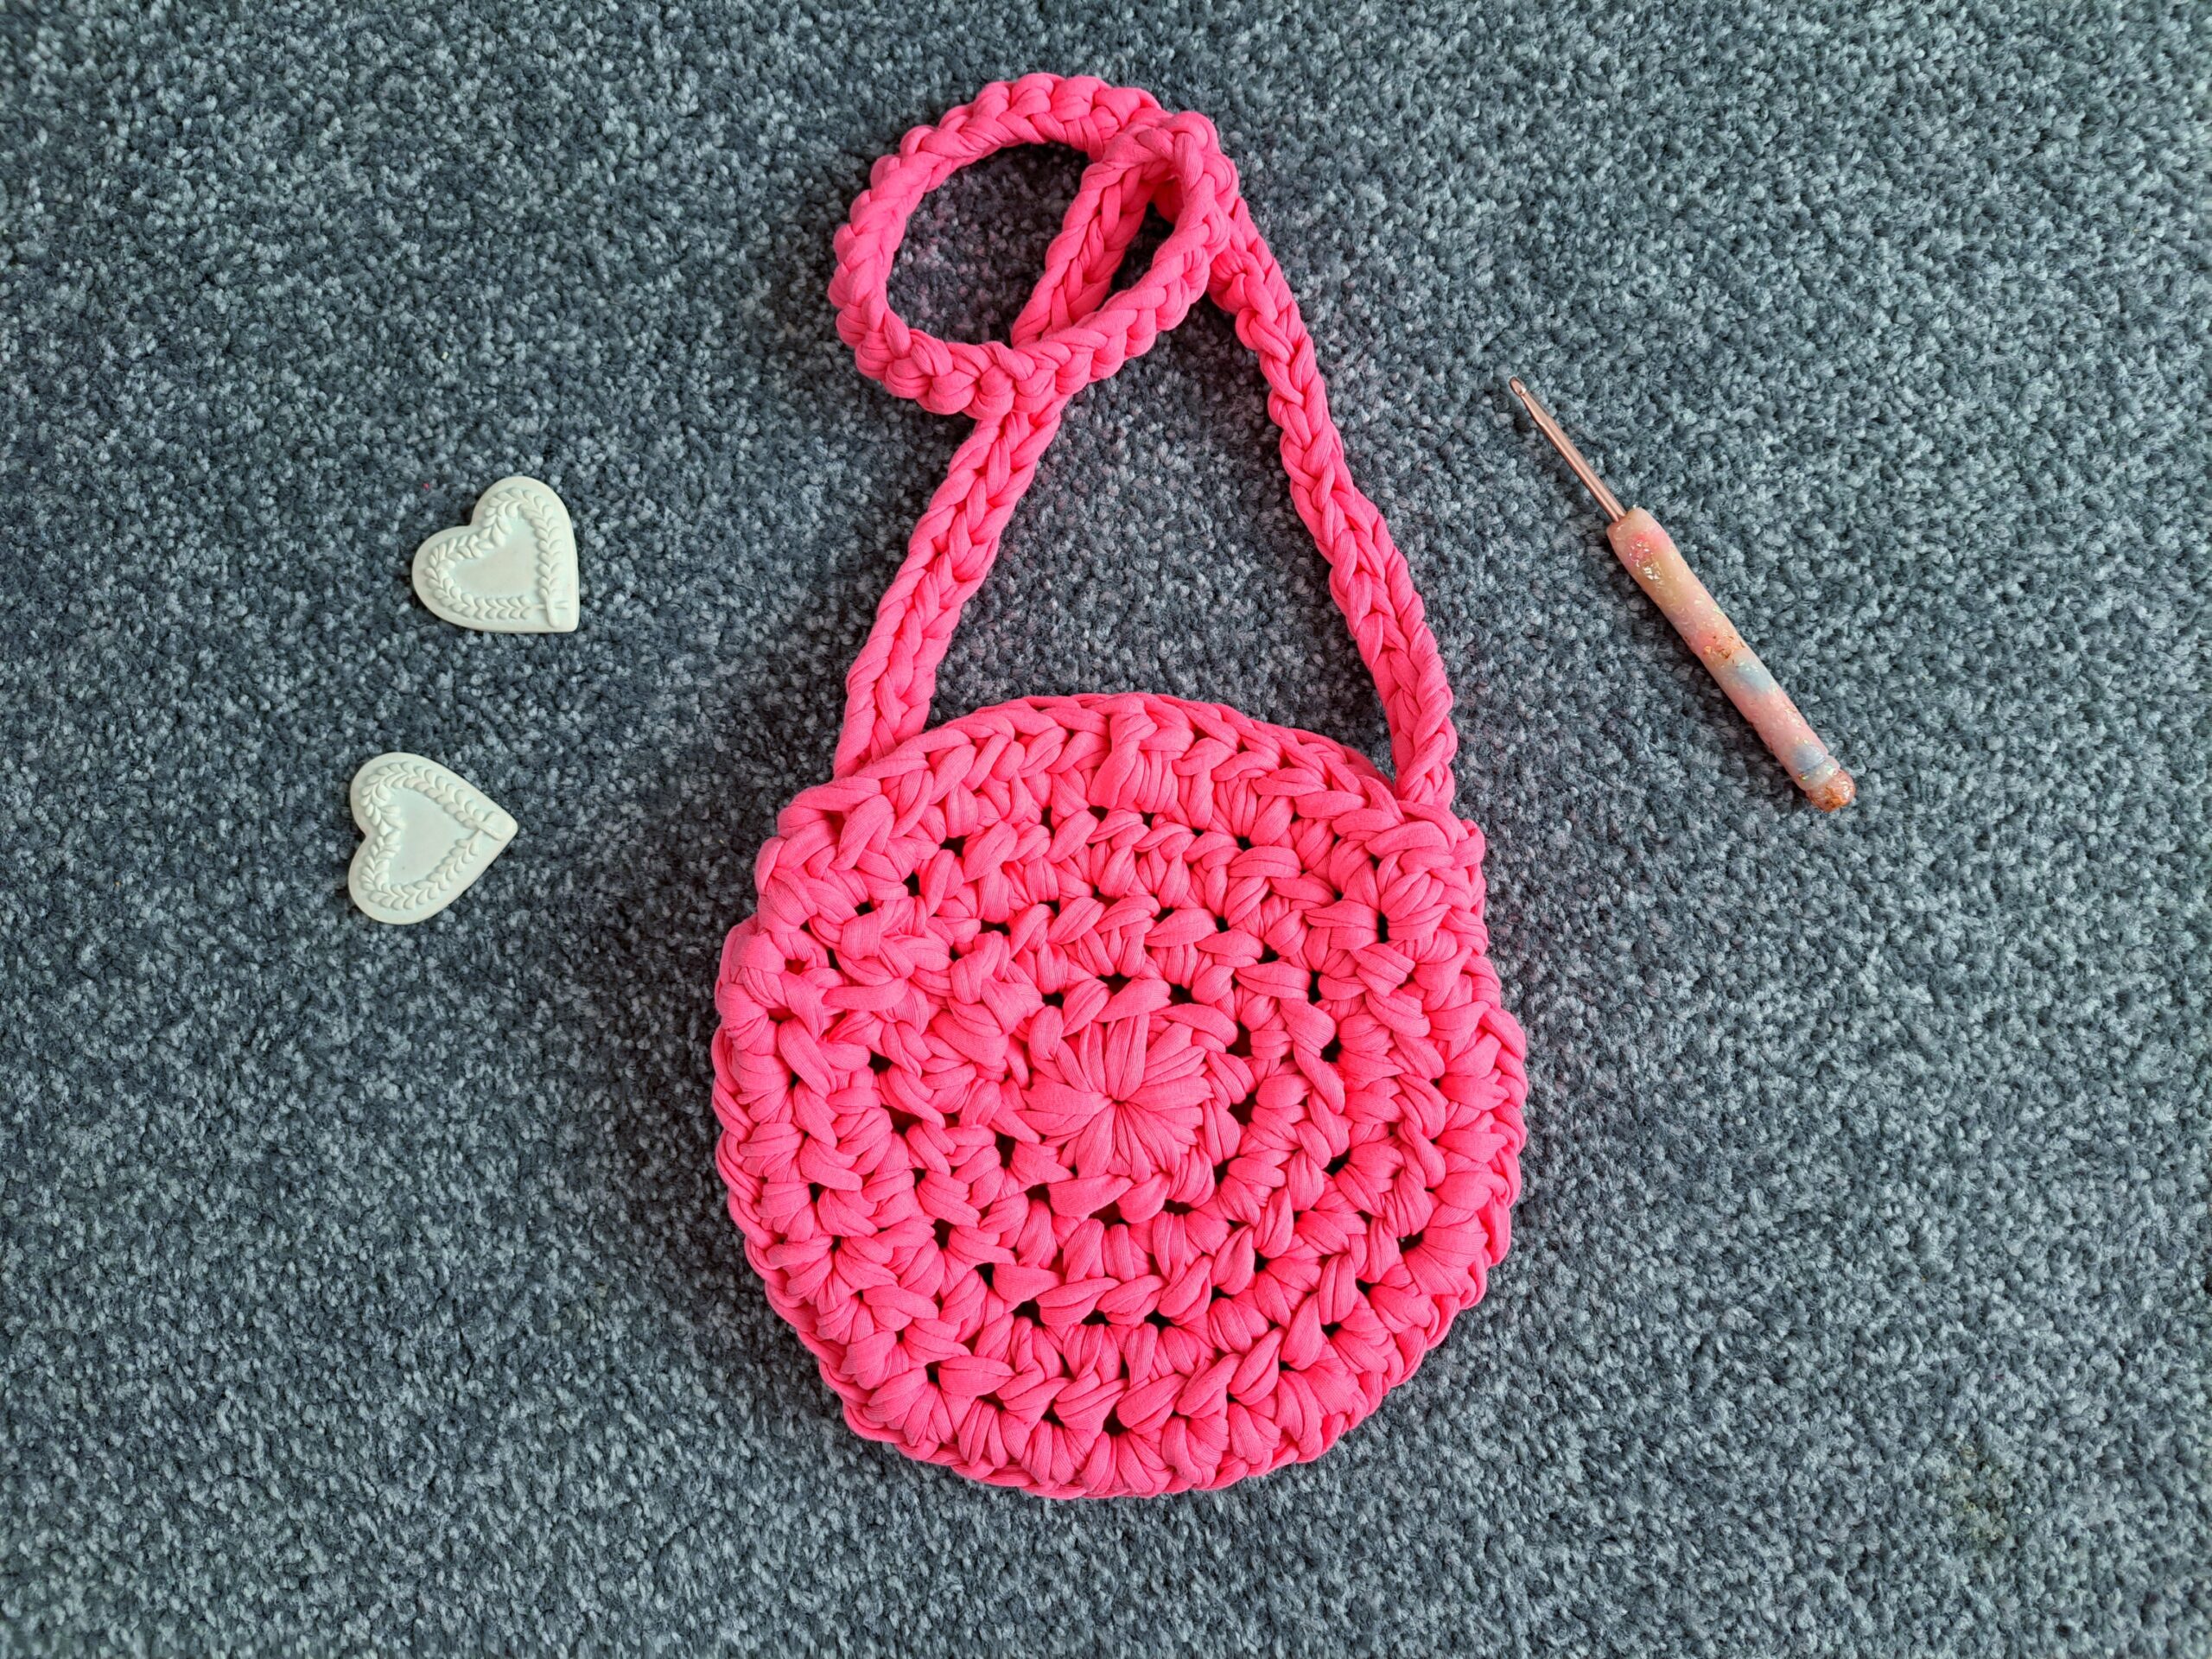 Crochet Round Boho Bag Free Pattern